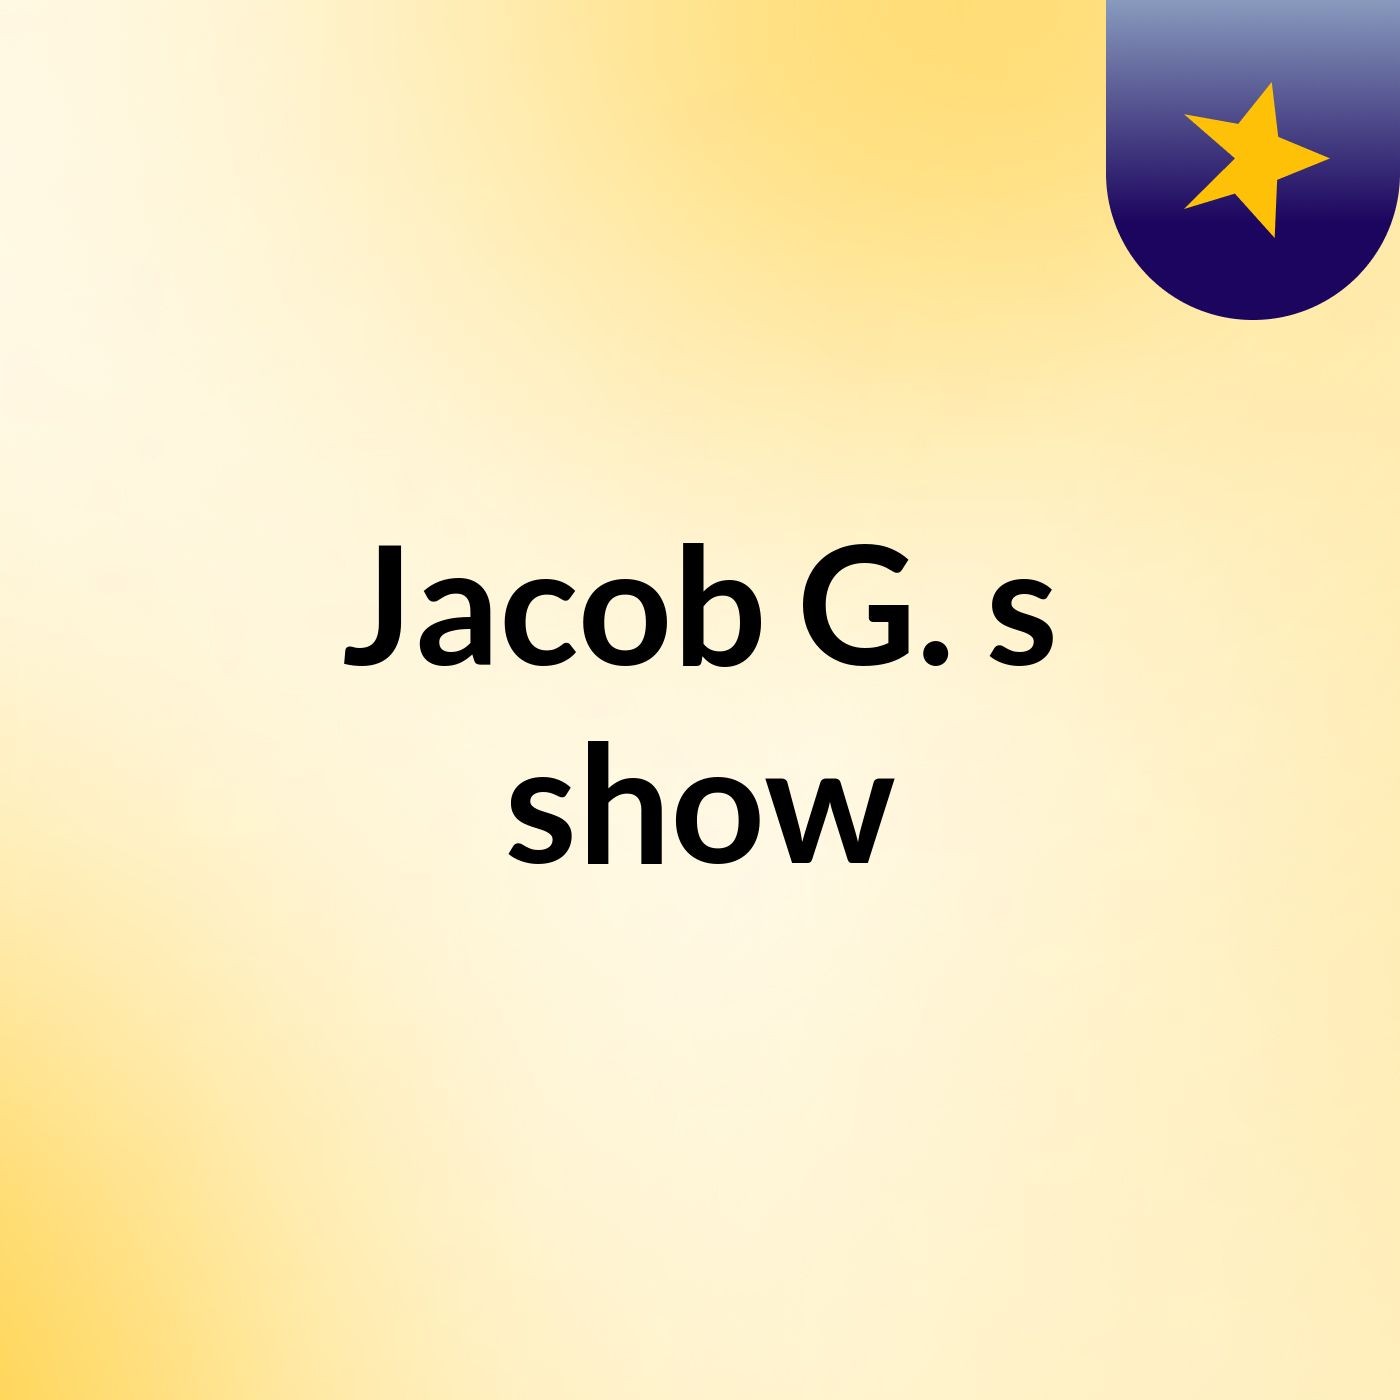 Jacob G.'s show